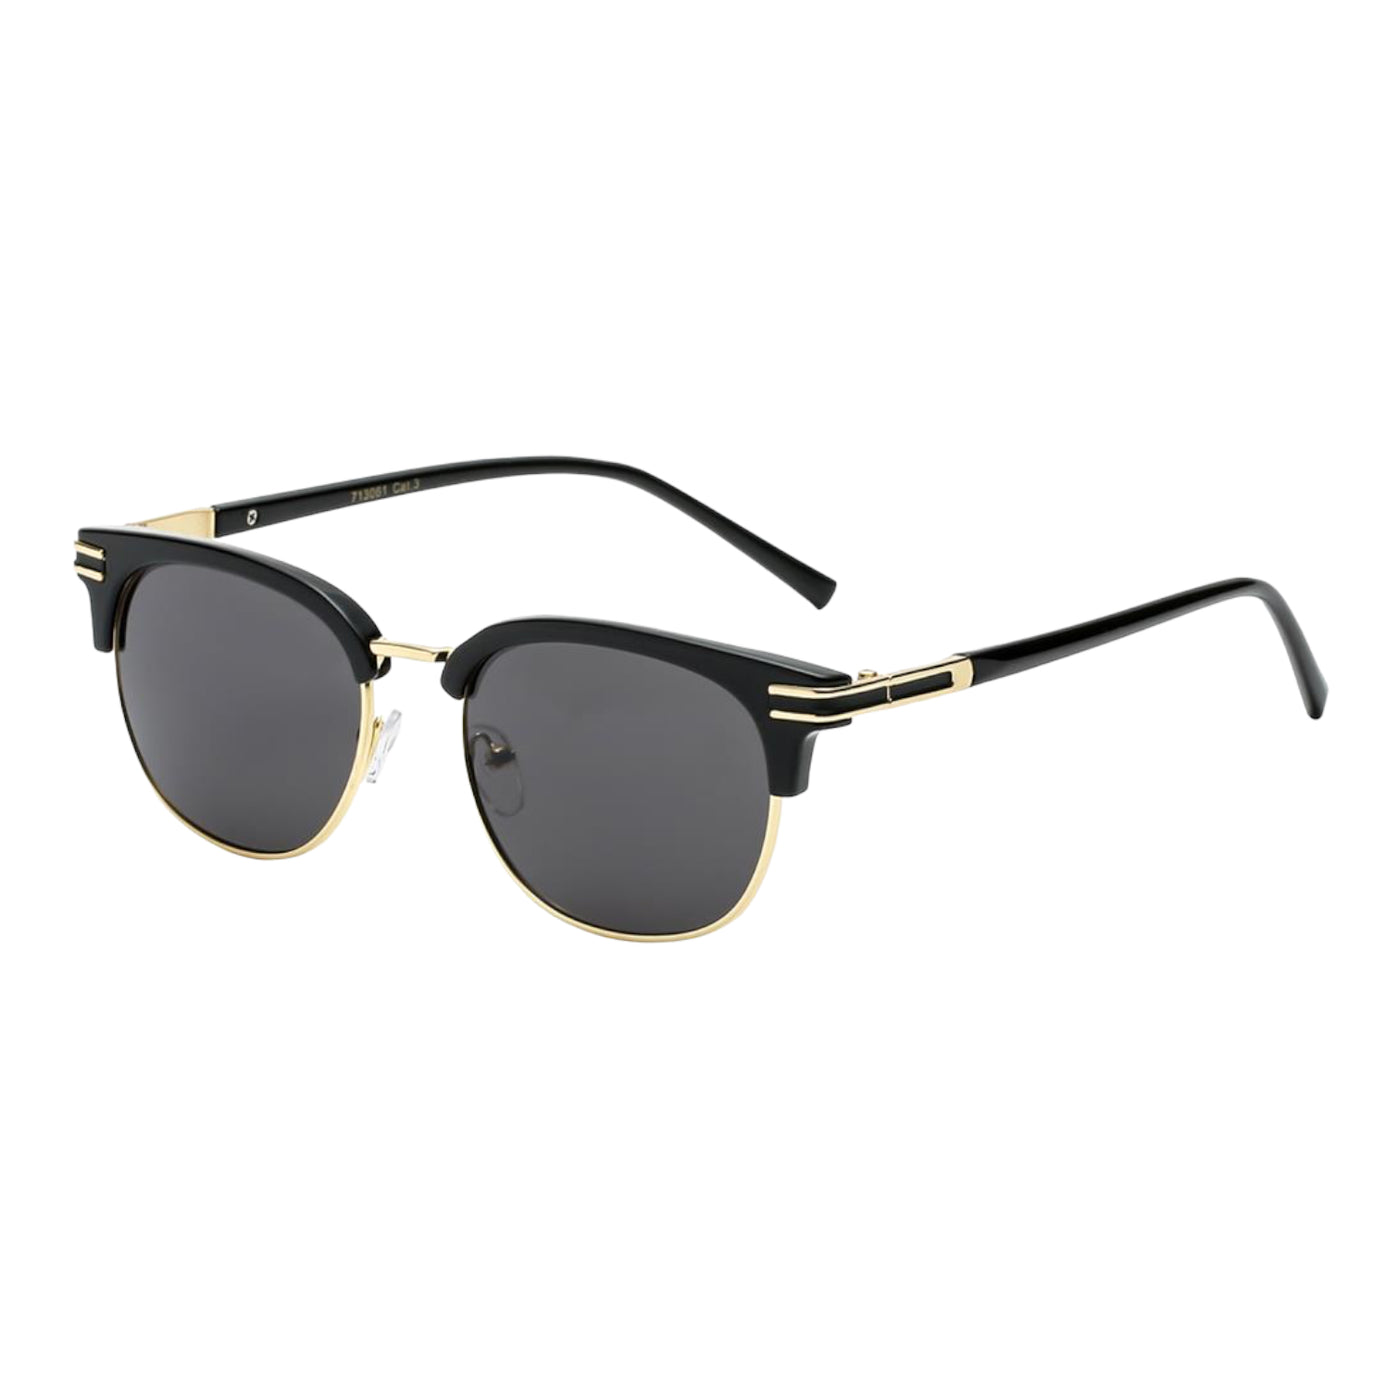 USA American Classic Retro Round Sunglasses BLACK/GOLD Frame with BLACK Lens